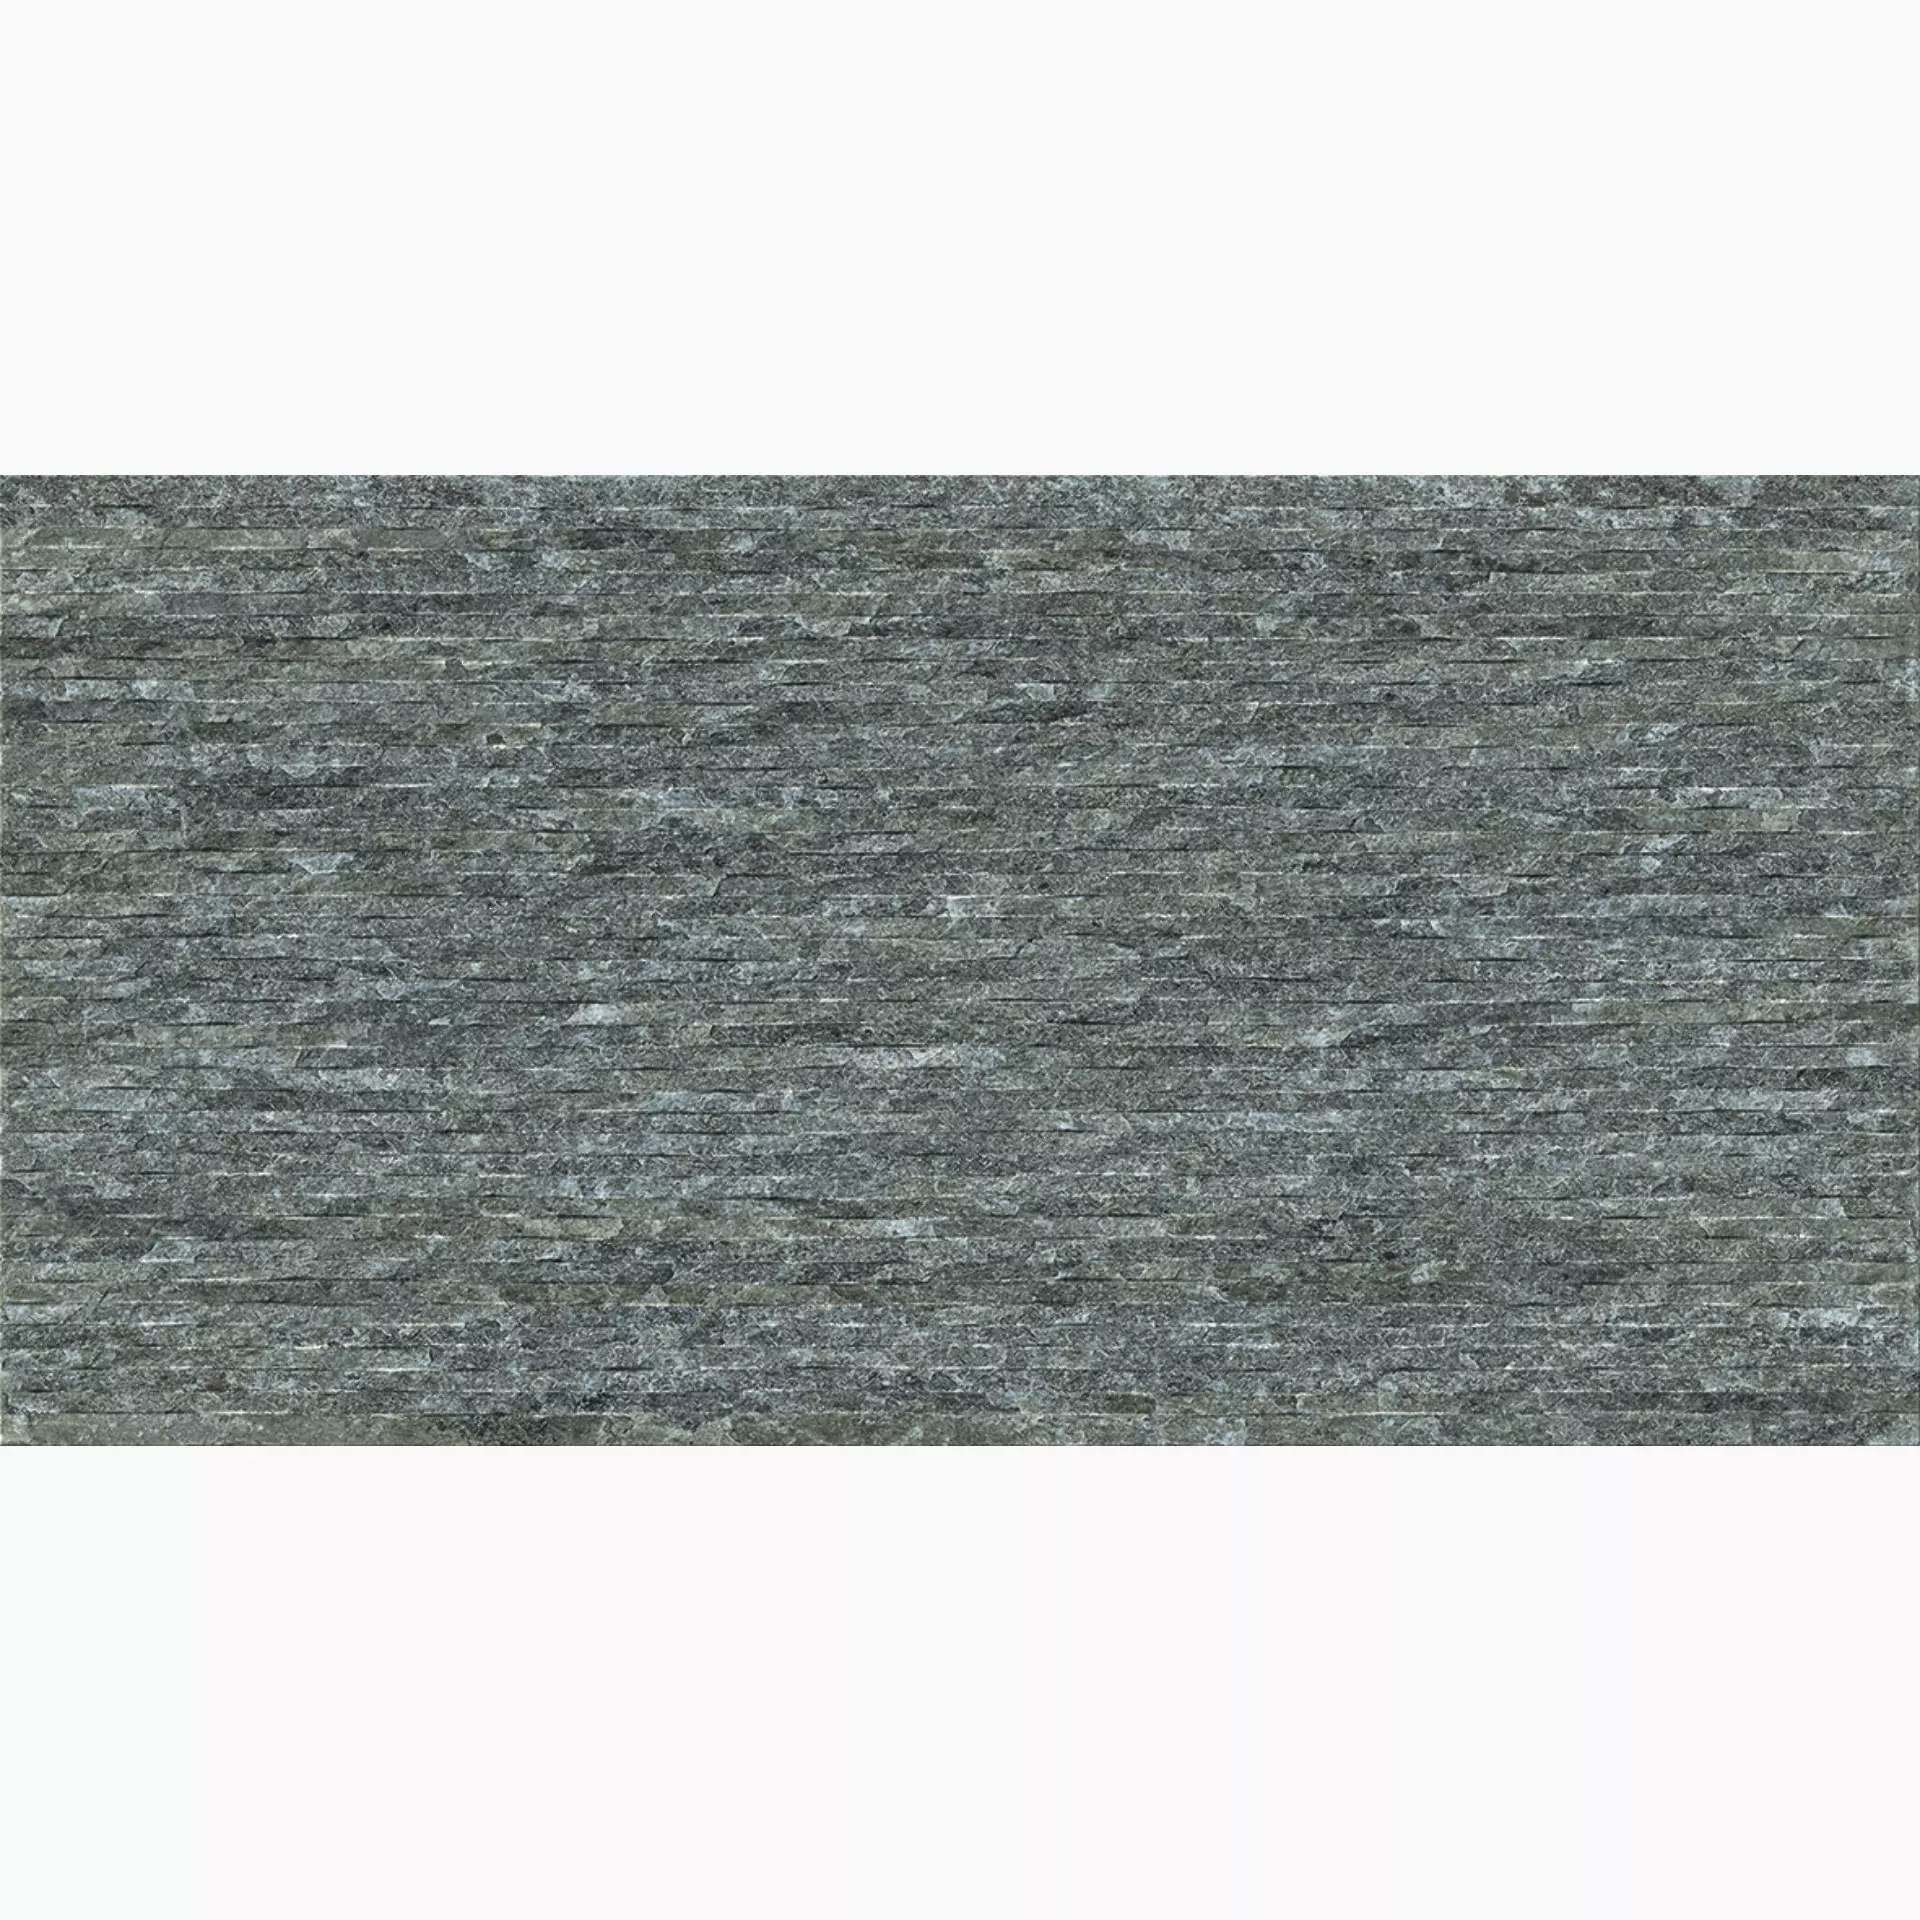 Ergon Oros Stone Antracite Naturale EKW9 60x120cm rectified 9,5mm